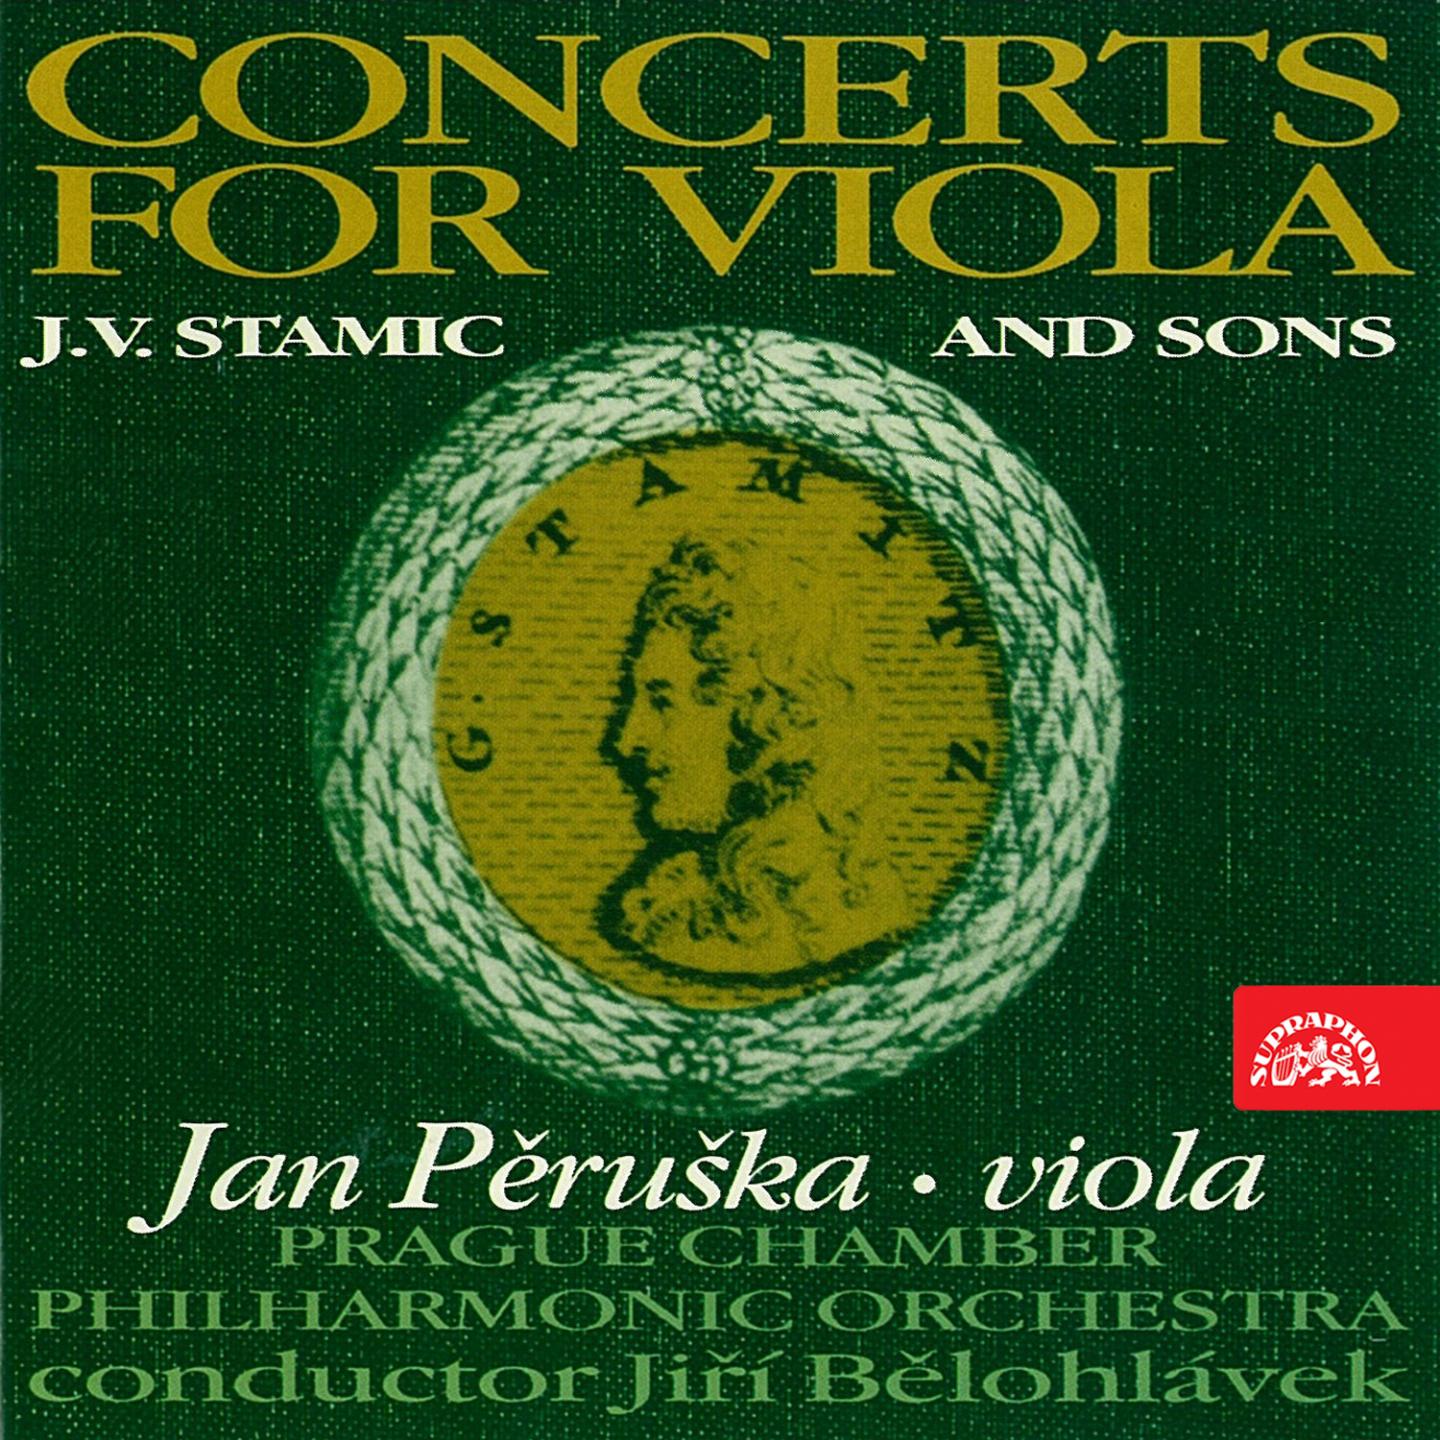 Concerto for Viola and Orchestra in D Major, Op. 1: I. Allegro non troppo